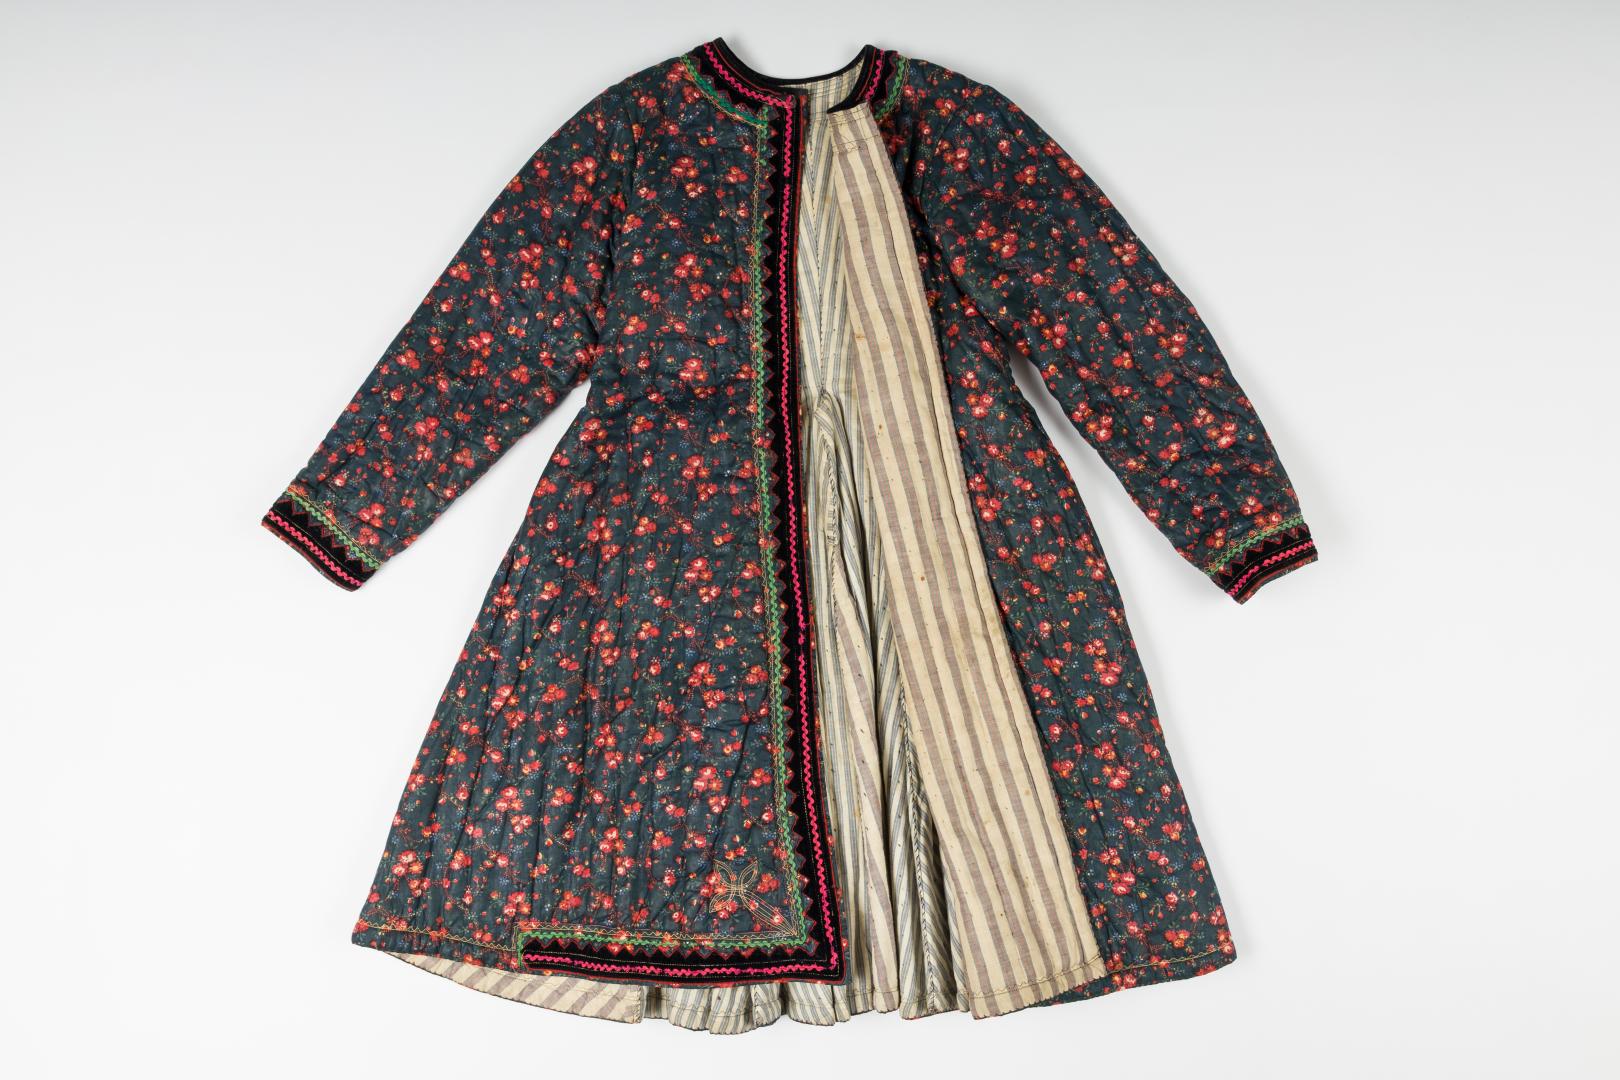 Yupka (indigo calico women's overcoat)